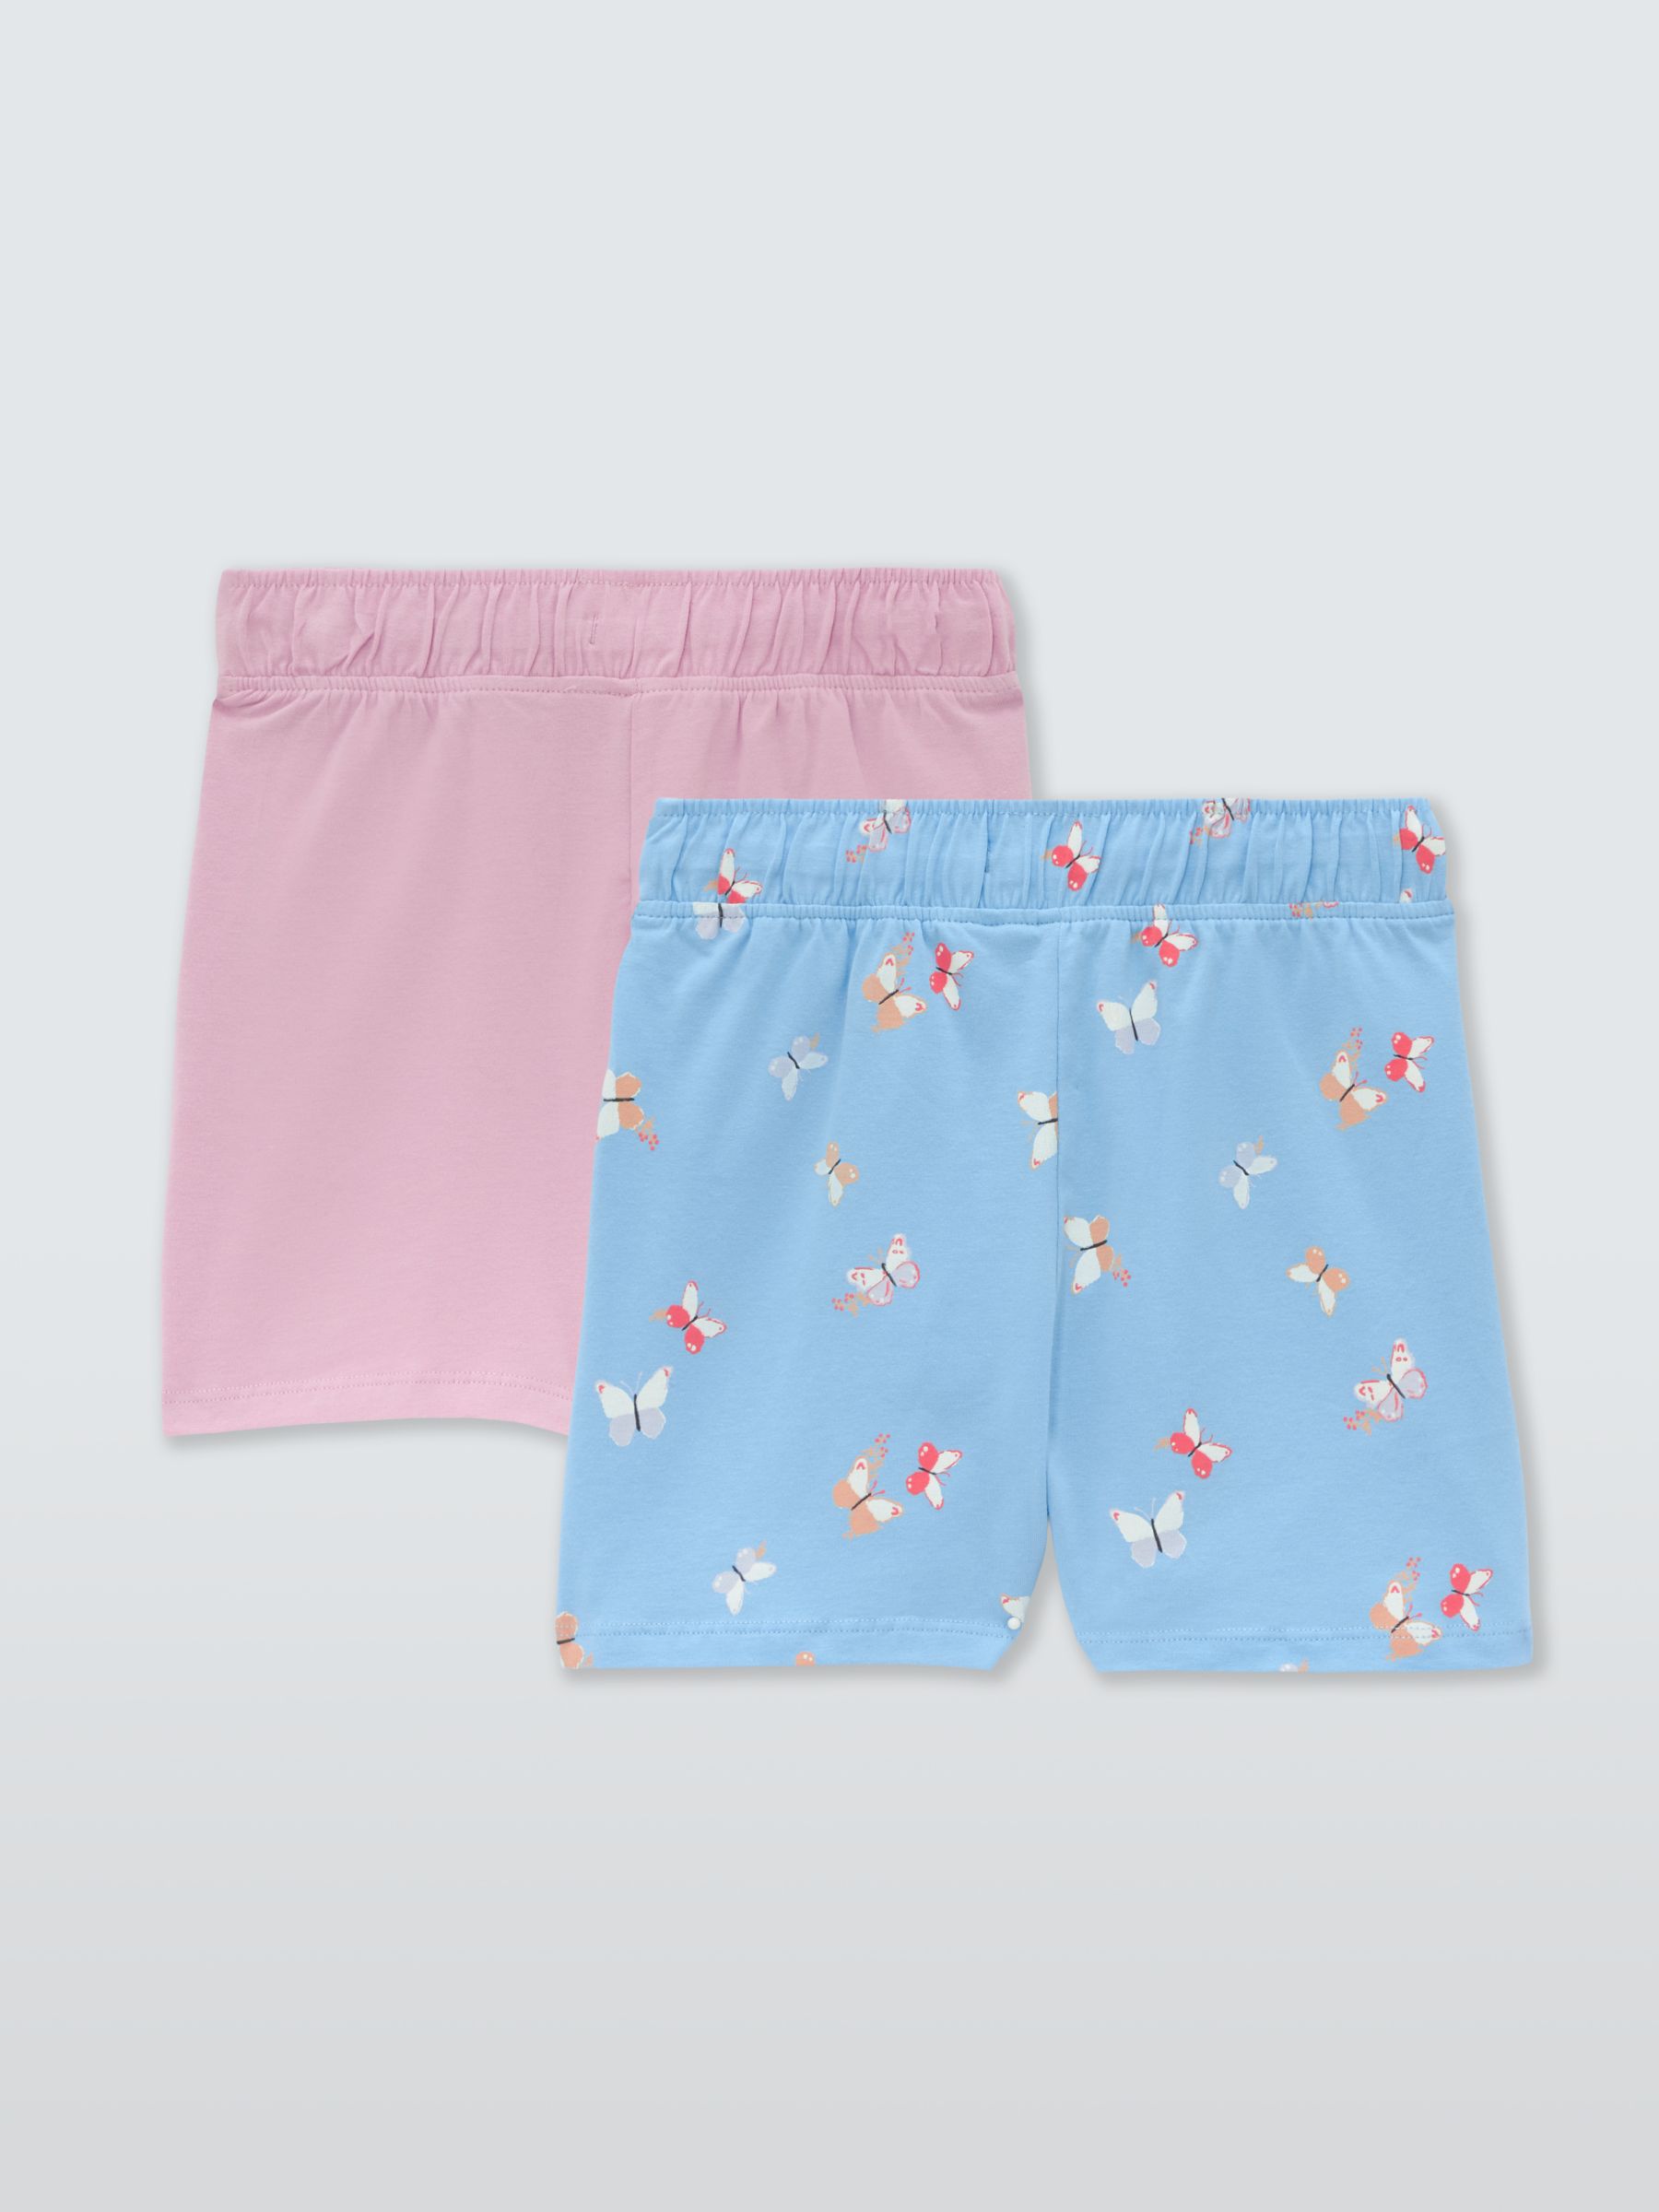 John Lewis Kids' Jersey Plain/Butterfly Shorts, Pack of 2, Multi, 7 years